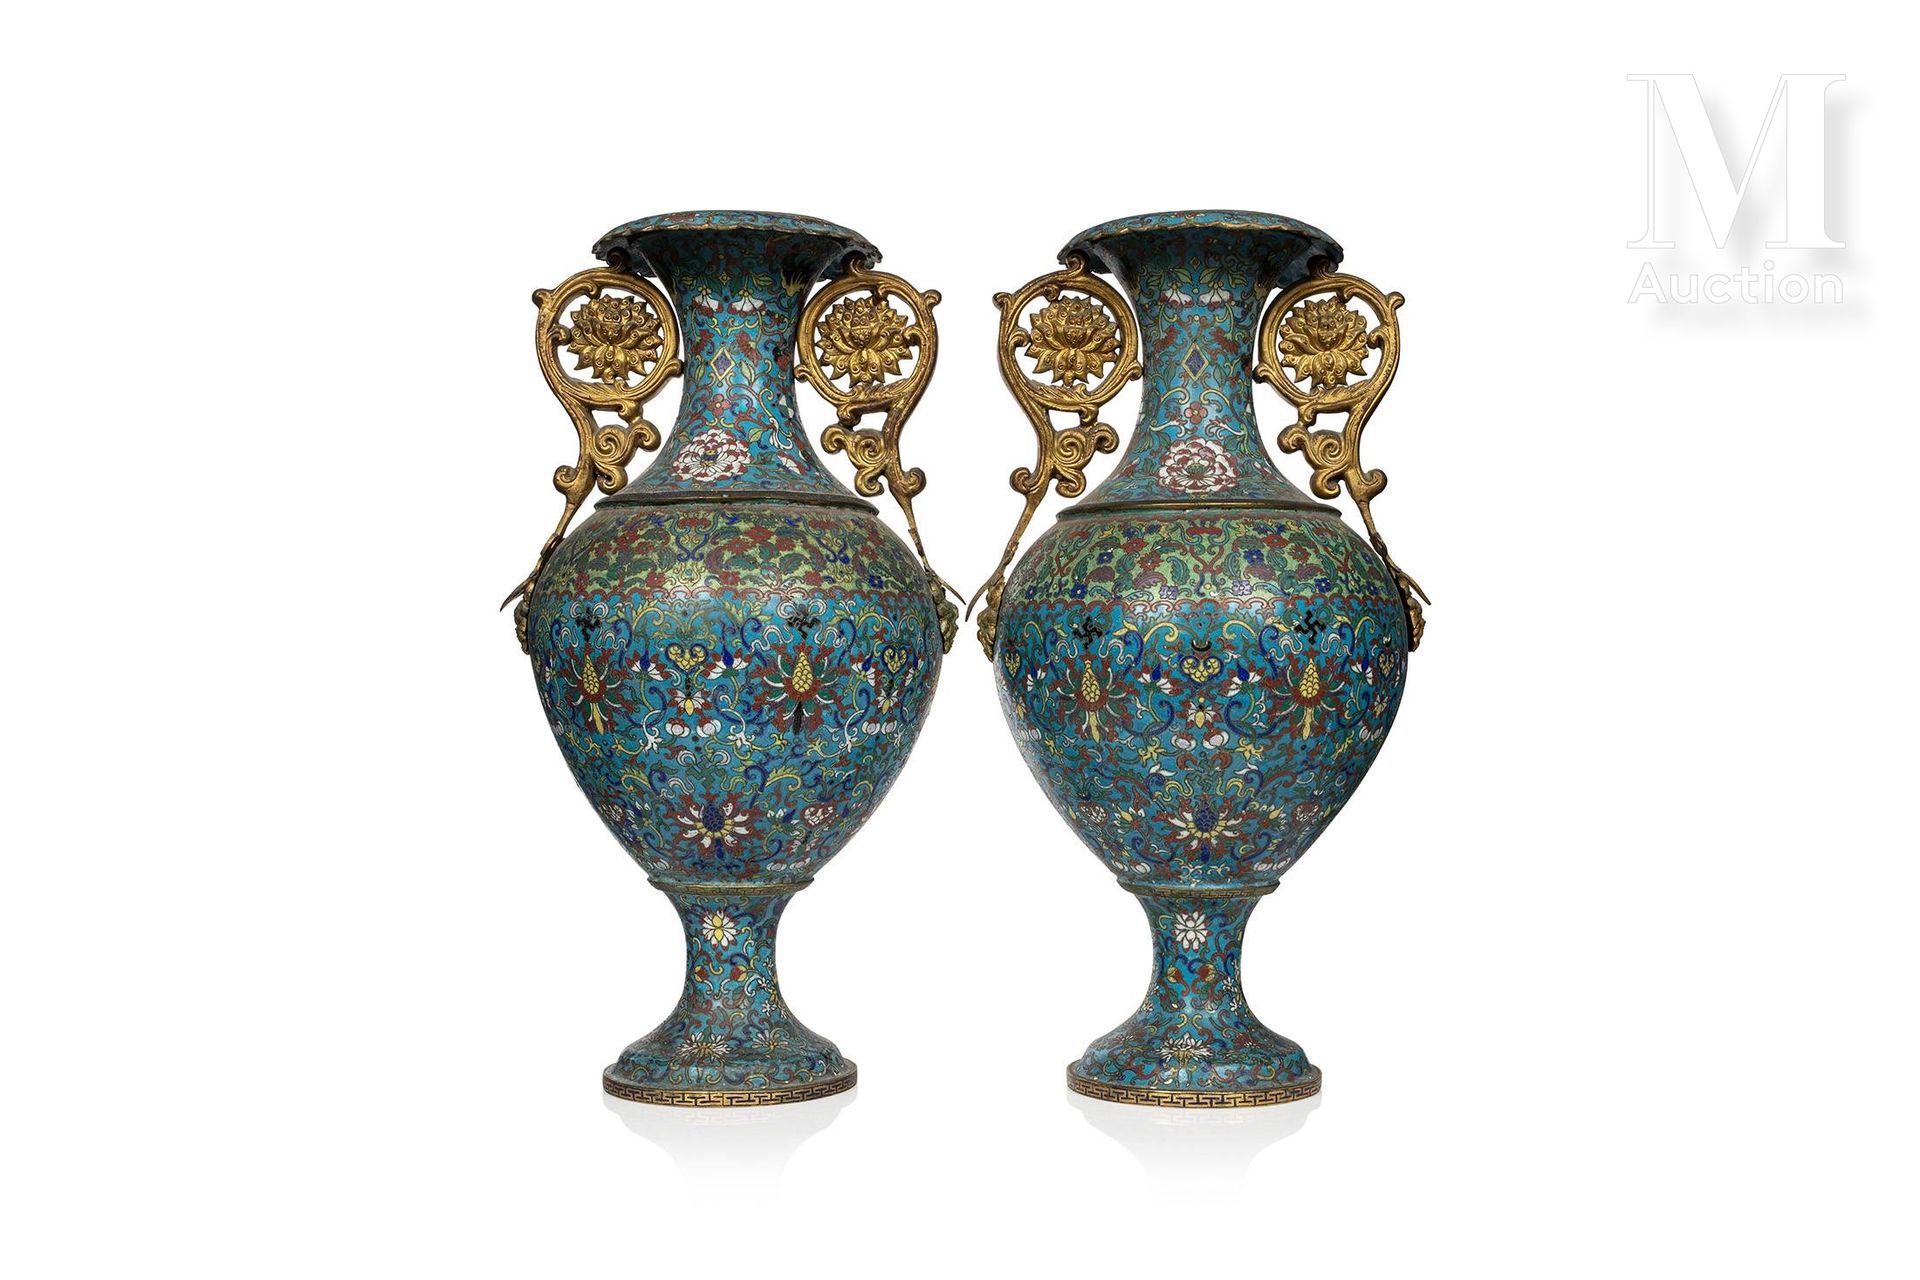 CHINE, XVIIIe SIÈCLE 
Un'elegante coppia di vasi in bronzo dorato e cloisonné

I&hellip;